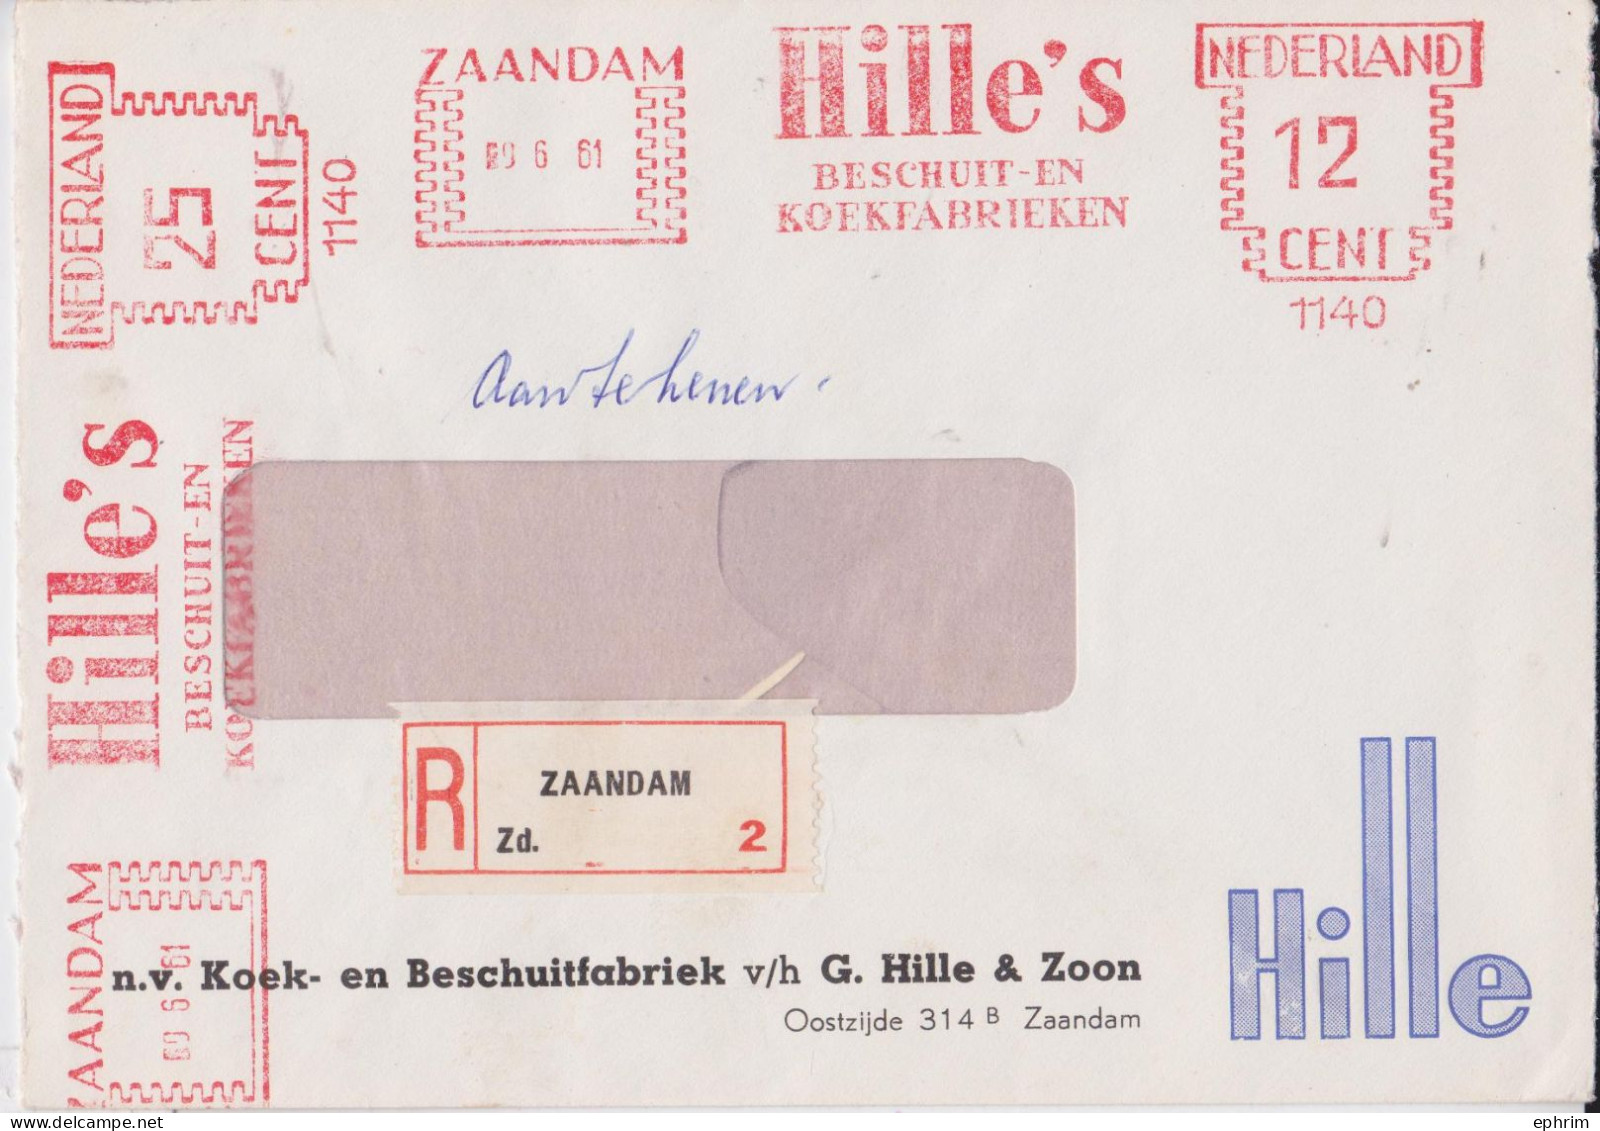 Zaandam Hille's Nederland Ema Red Meter Machine Mail Stampless Registered Cover Lettre Affranchissement Mécanique 1961 - Maschinenstempel (EMA)